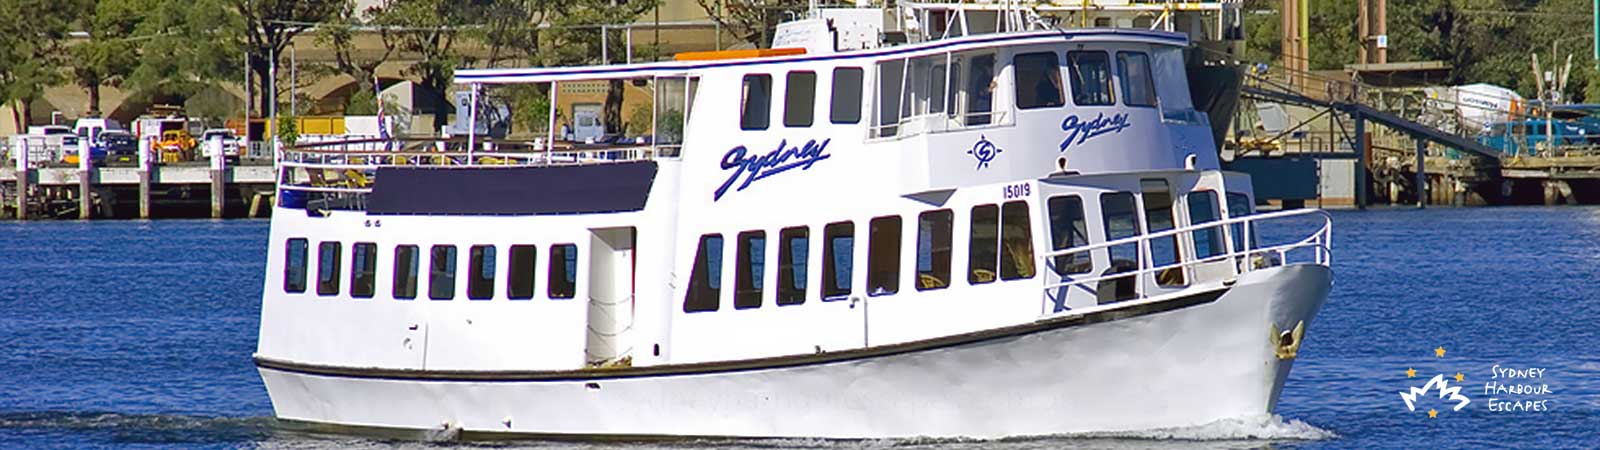 MV Sydney boat in Sydney Harbour Bridge